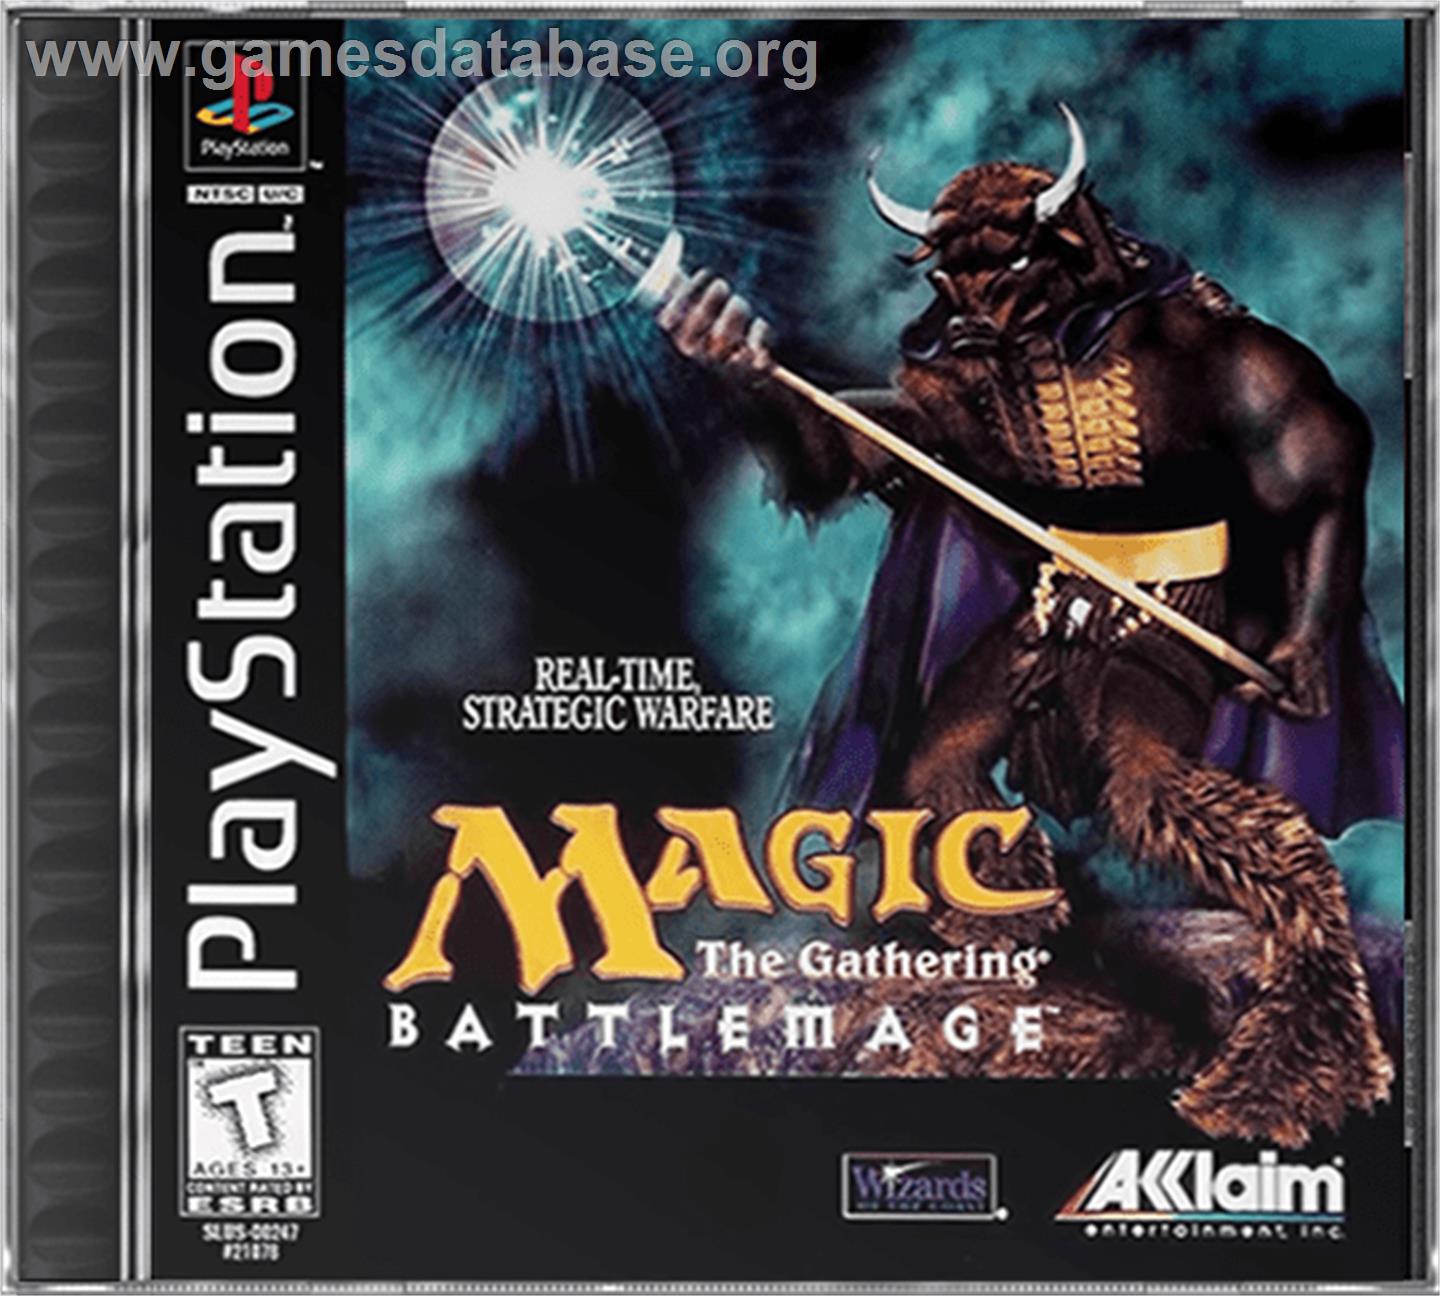 Magic: The Gathering - Battlemage - Sony Playstation - Artwork - Box